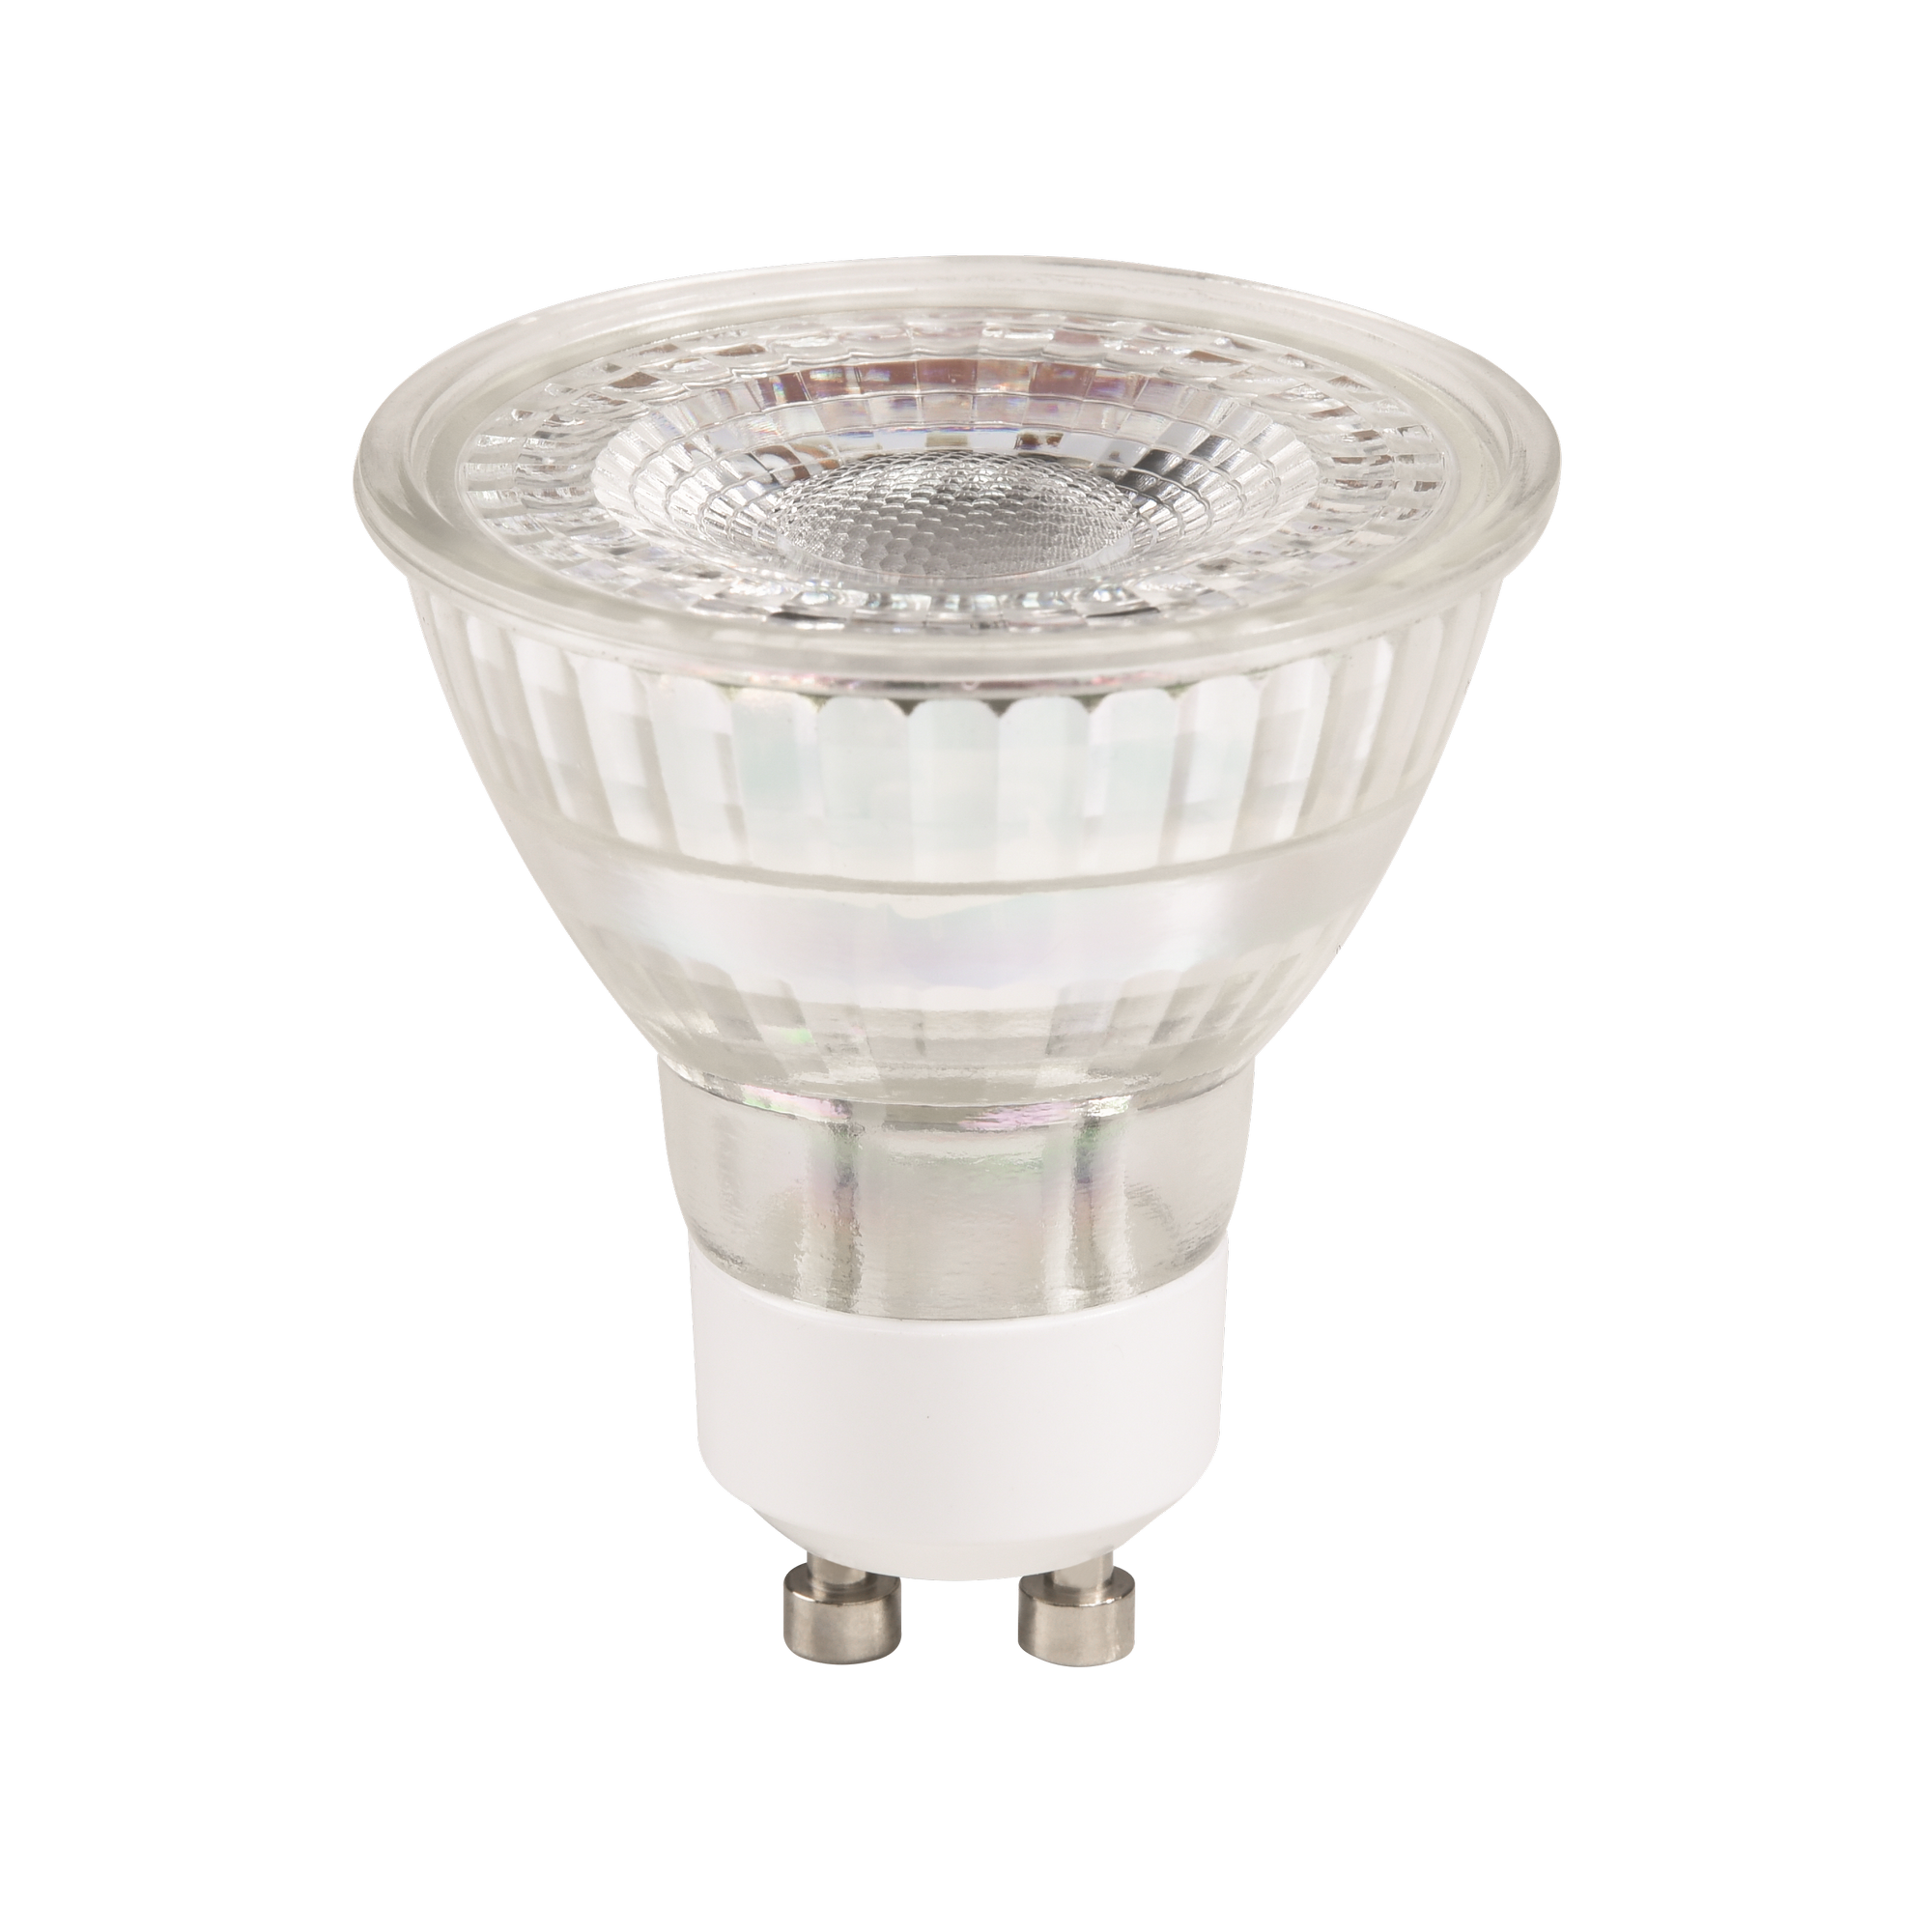 LED-Reflektor-Lampe 3 W GU10 warmweiß 345 lm + product picture